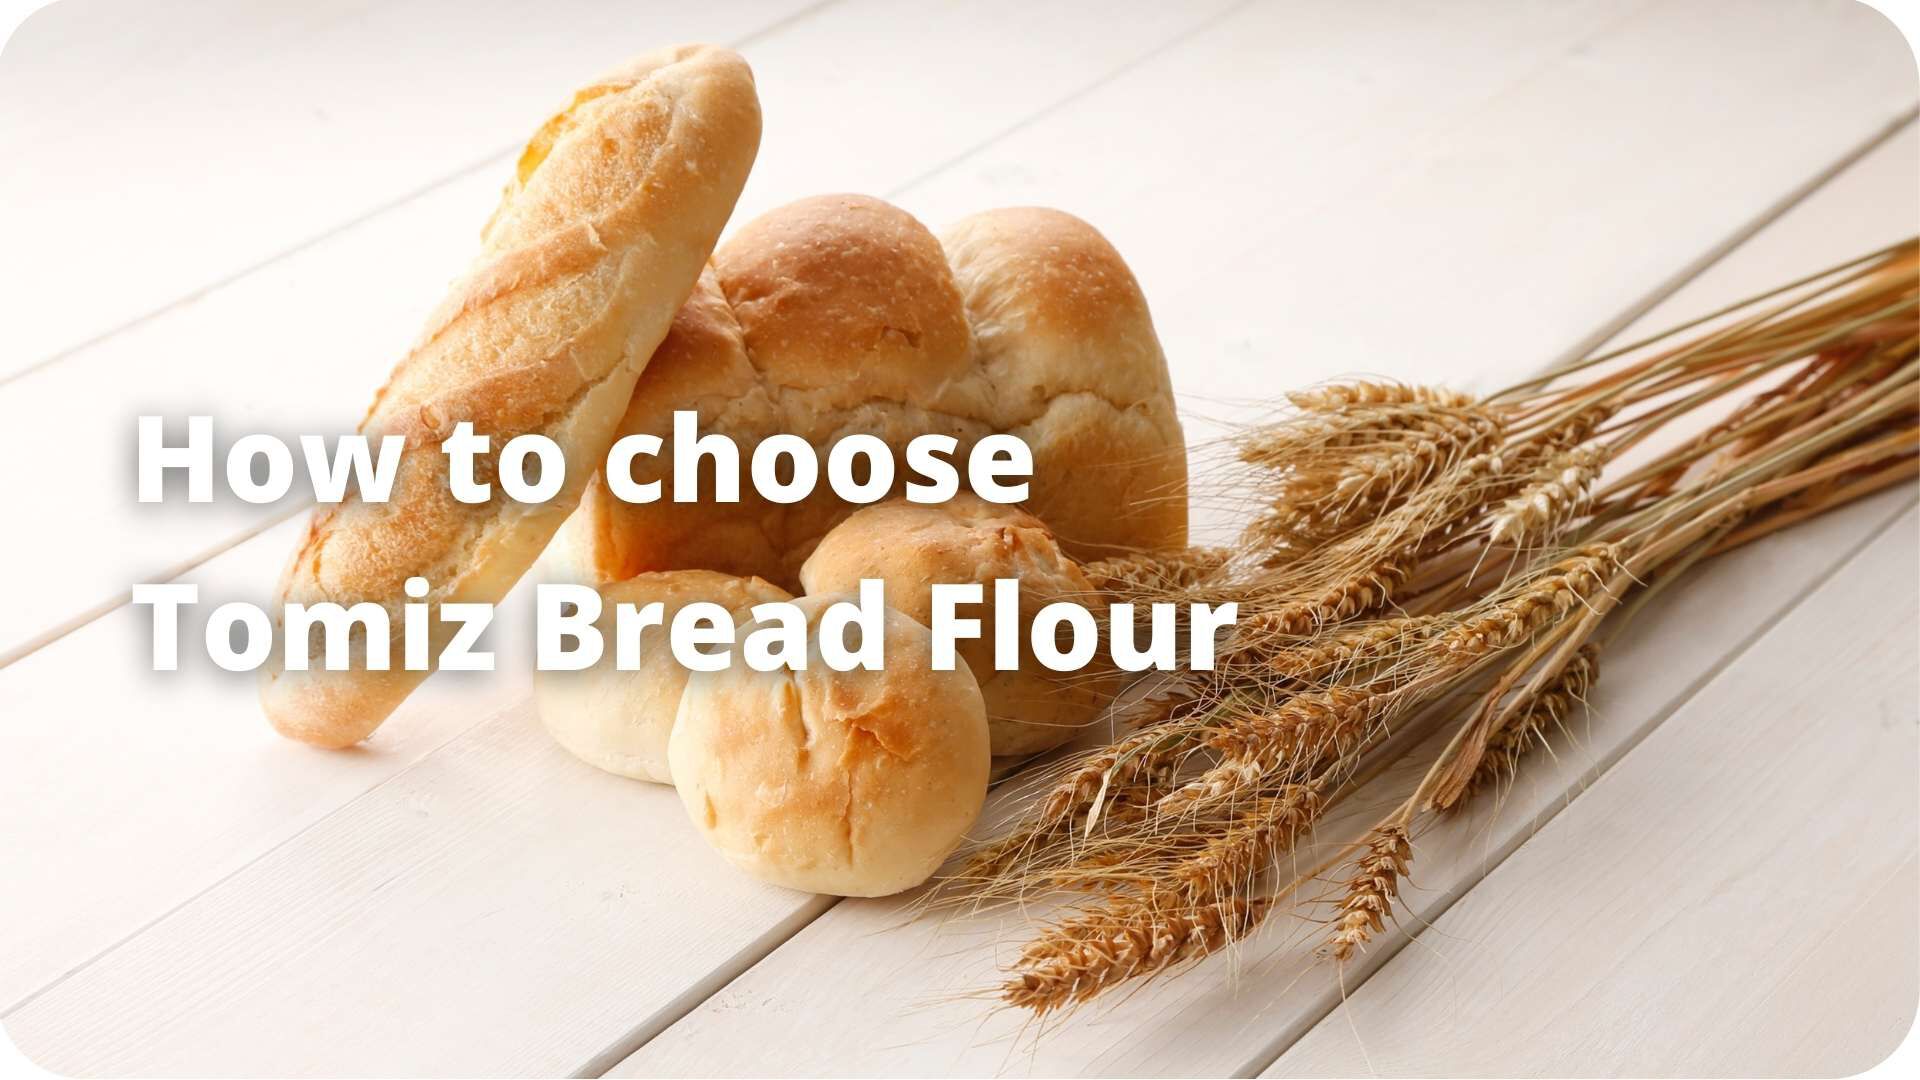 How to choose Tomiz Bread Flour